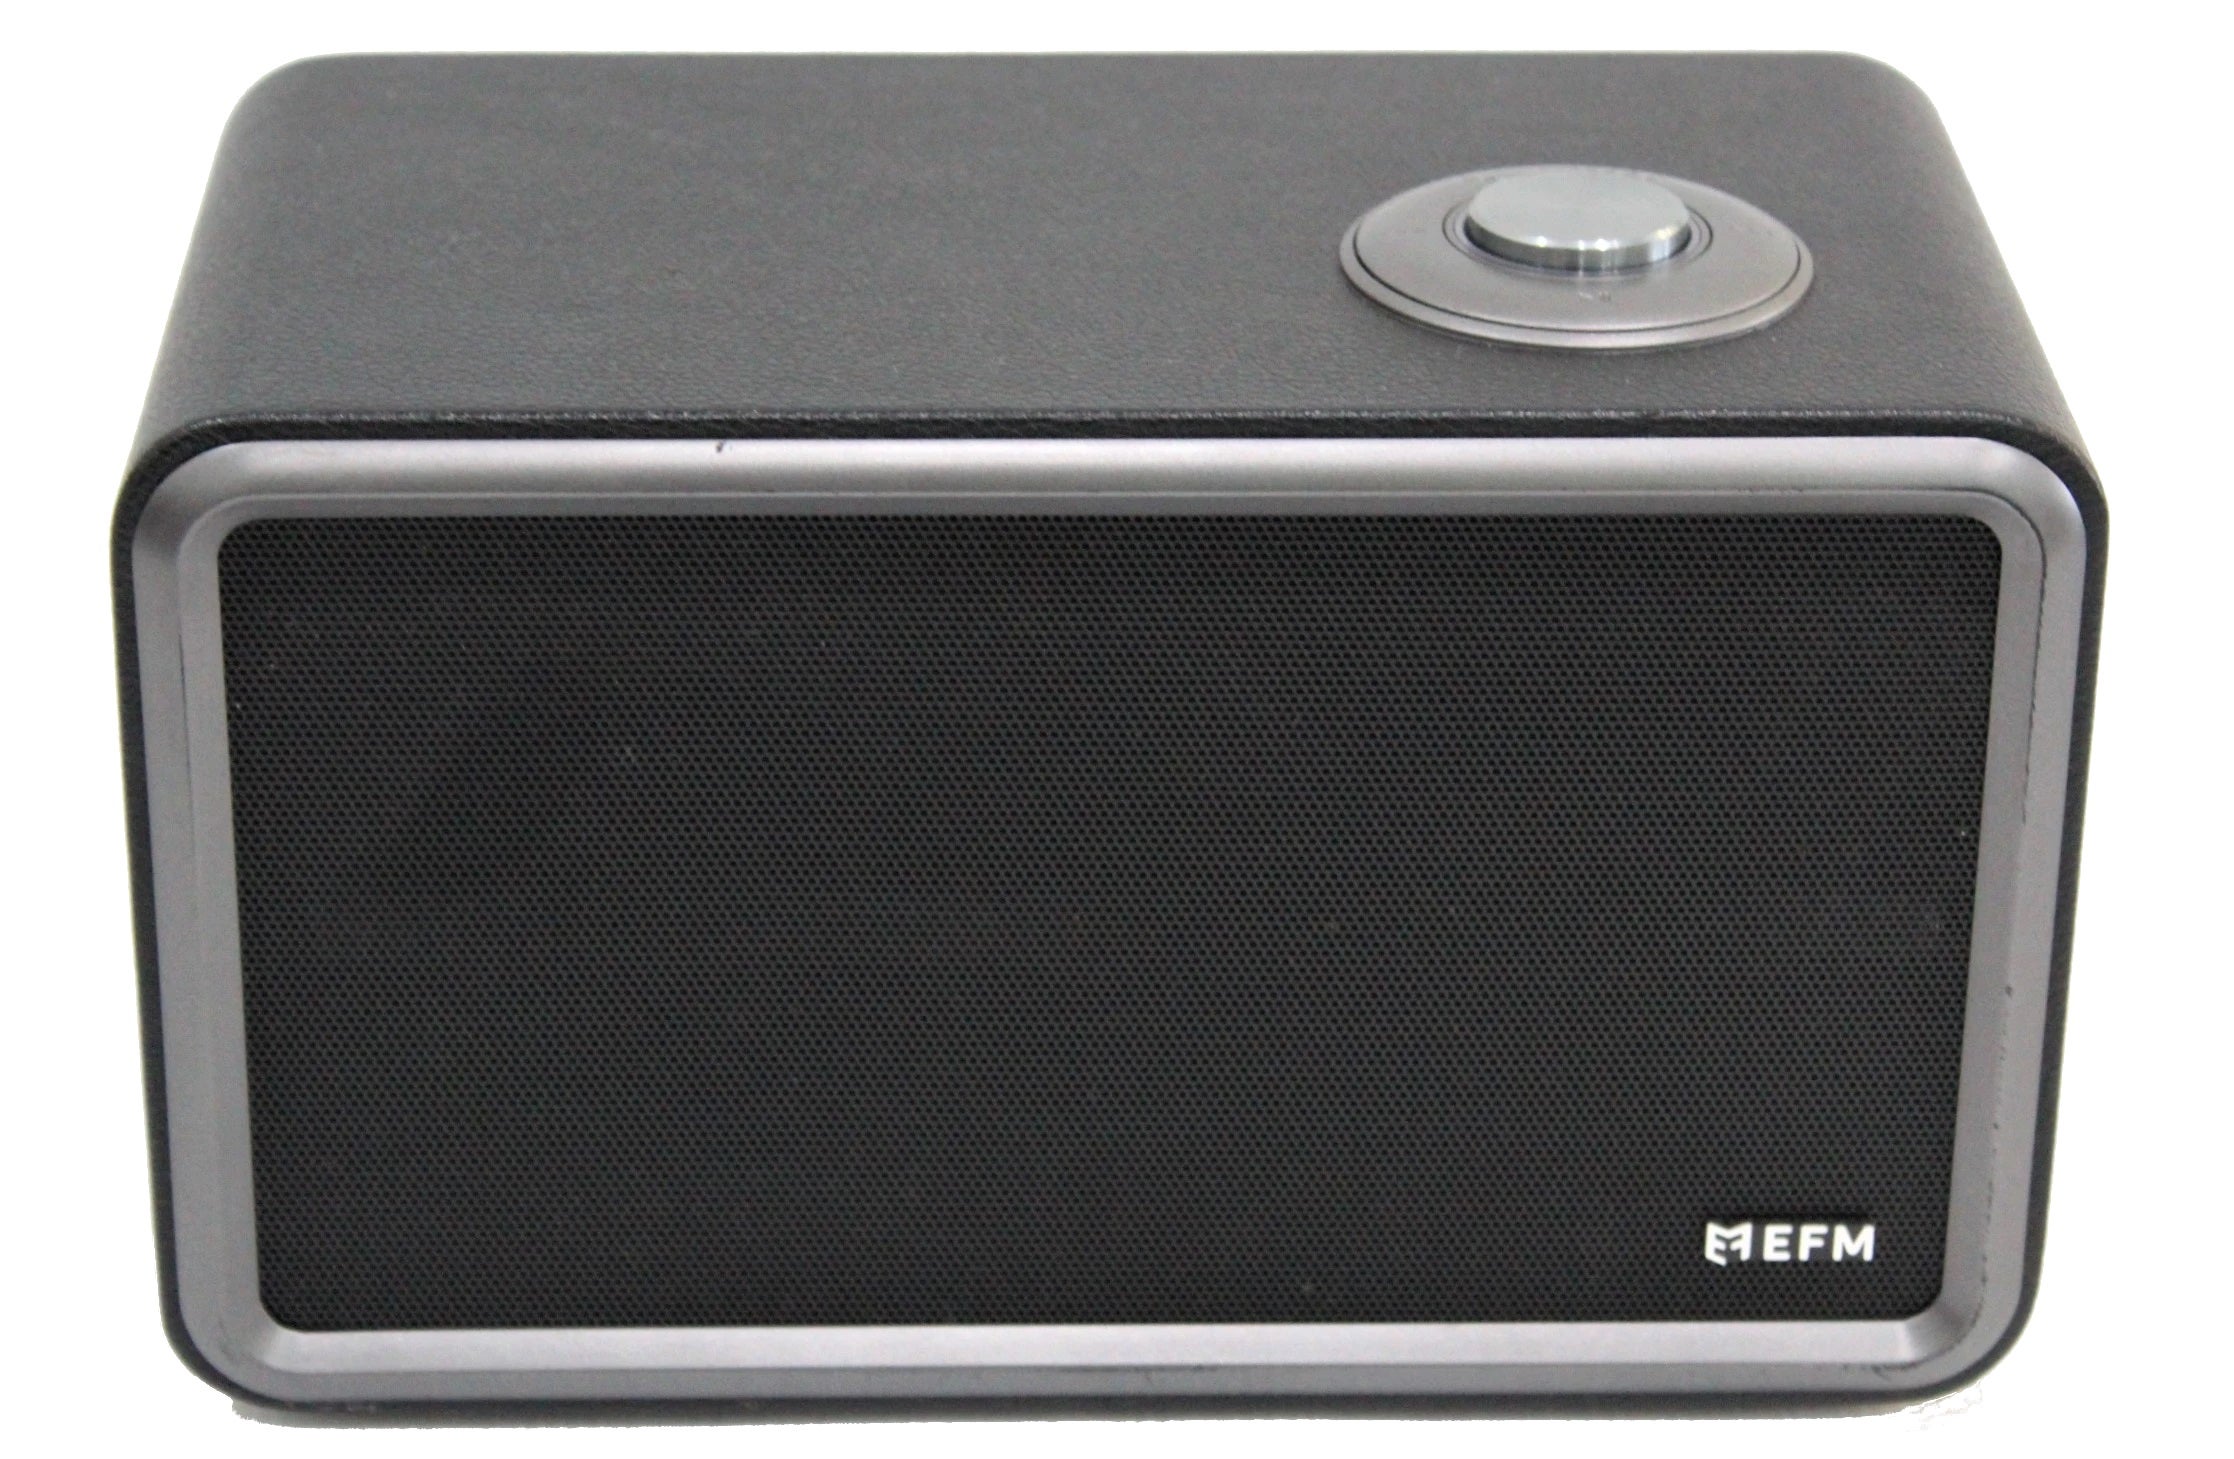 Efm Memphis Retro Portable Speaker